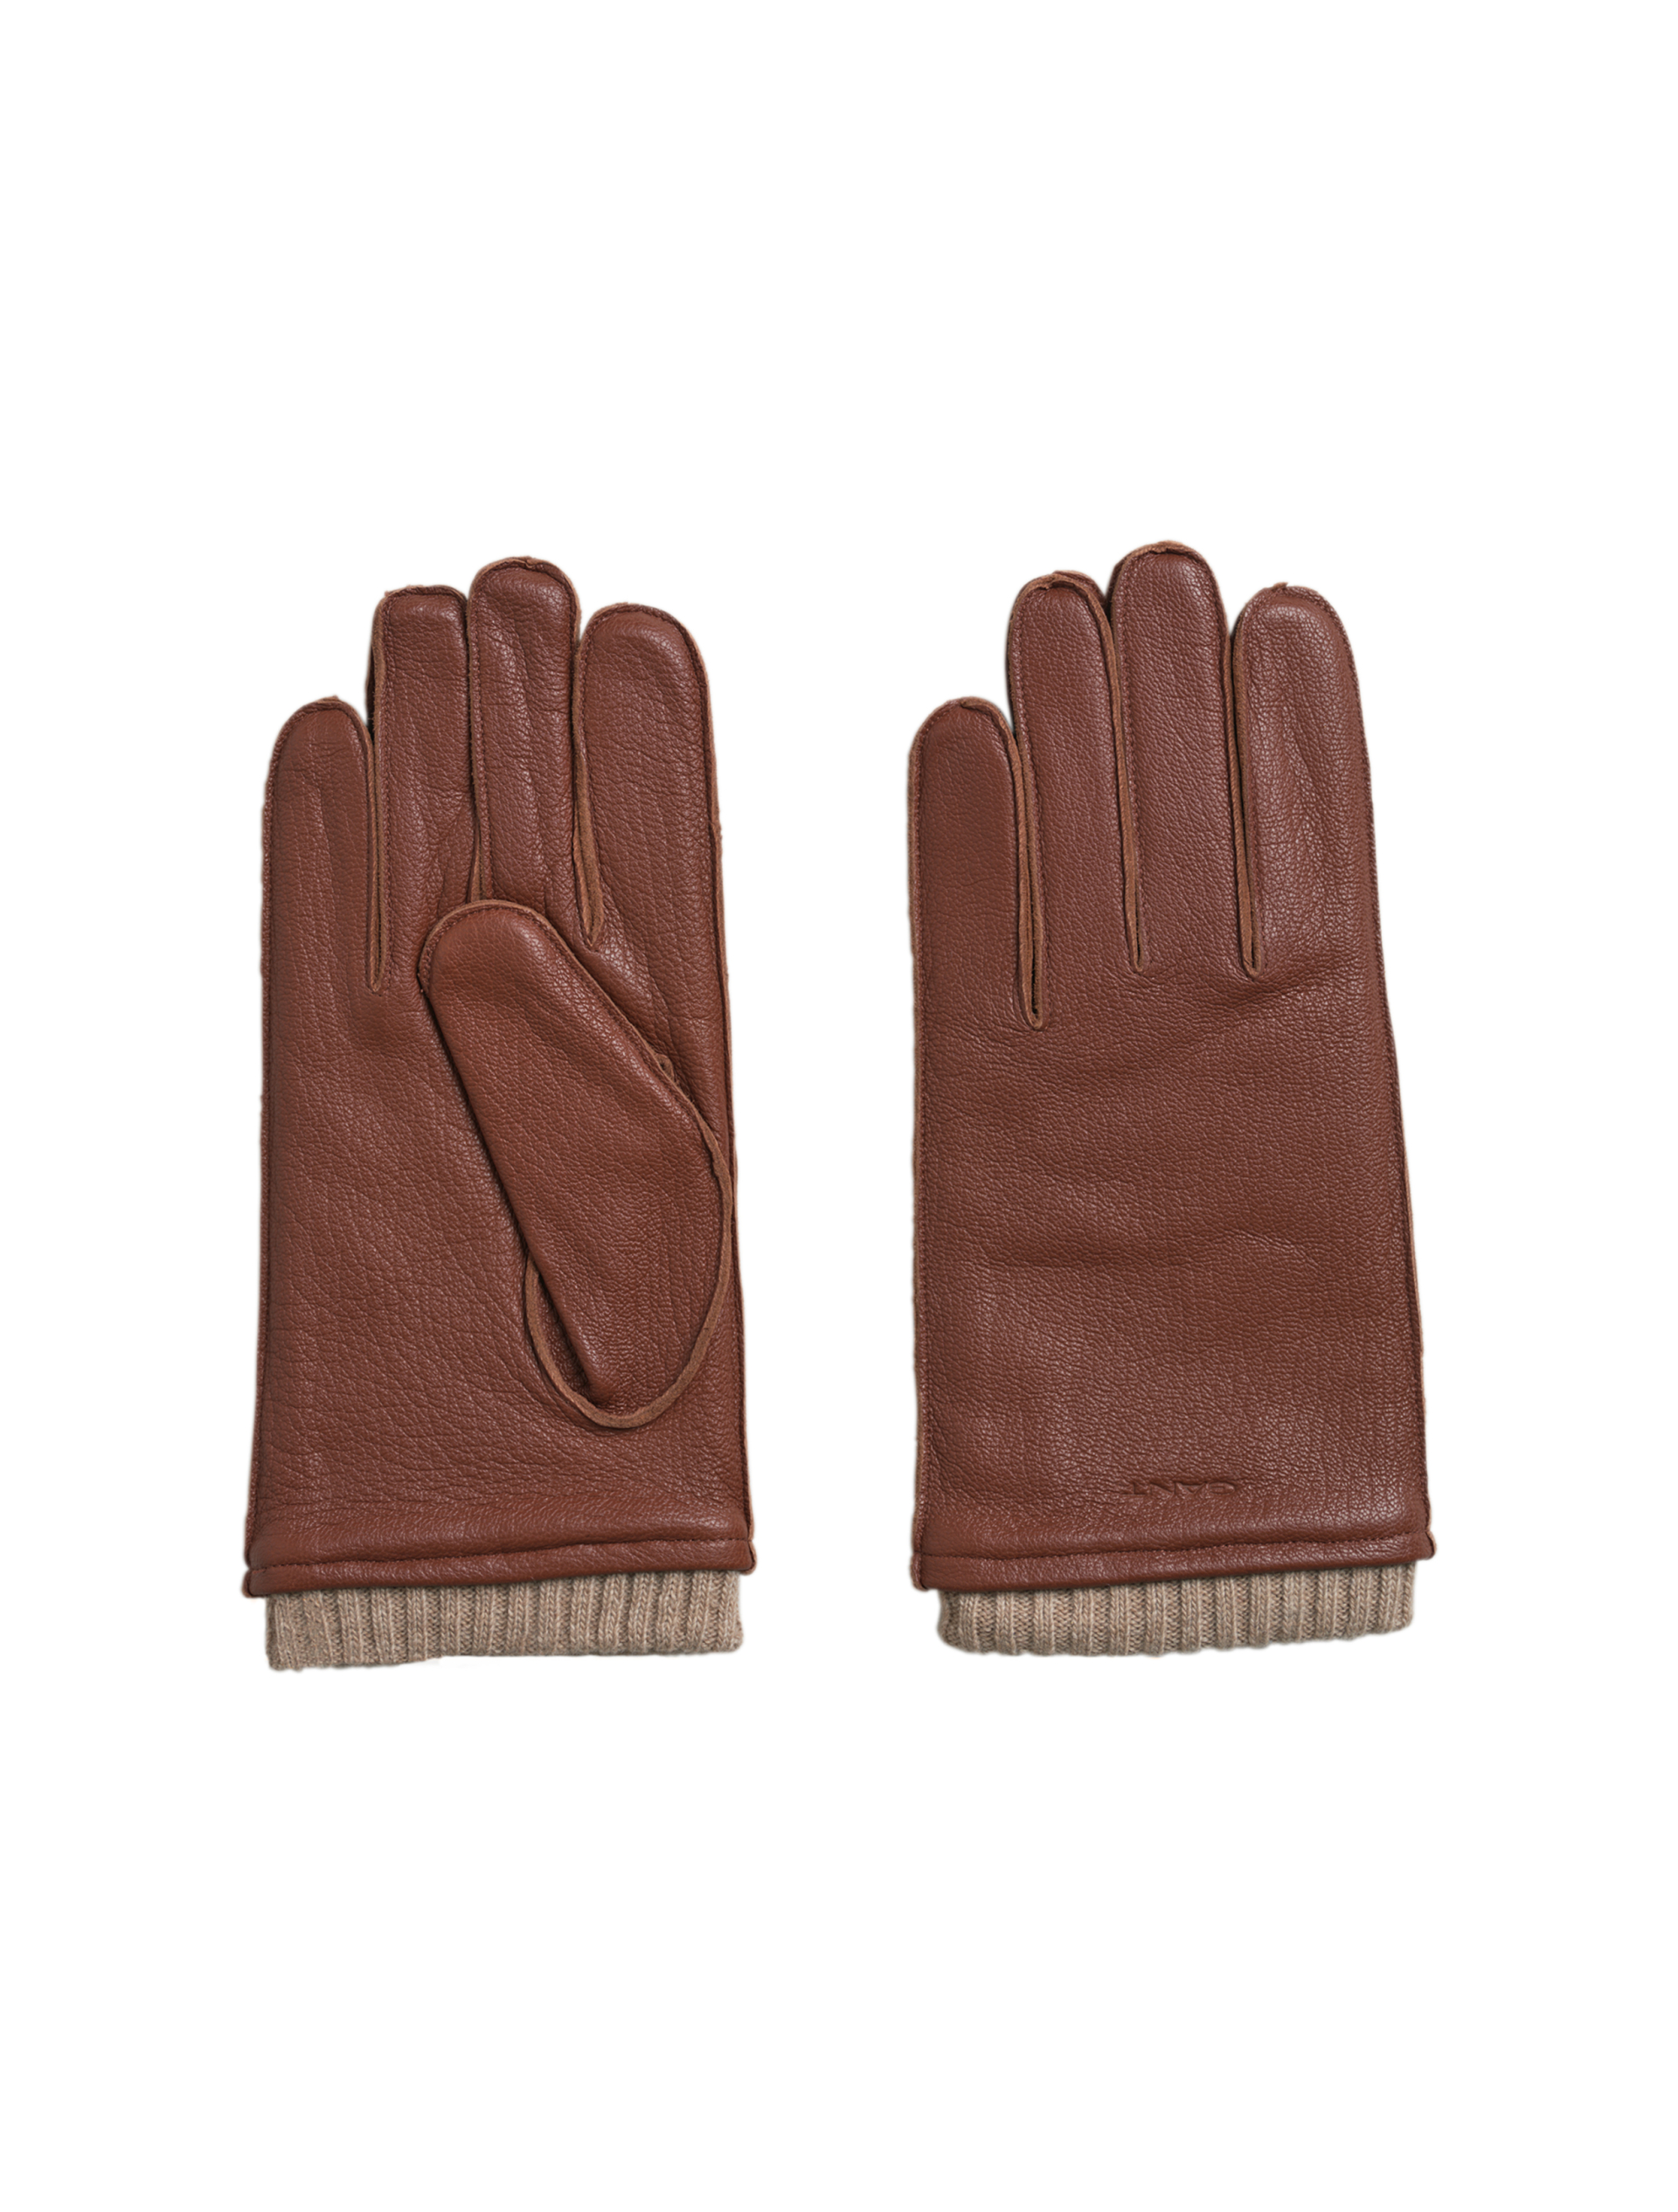 Gant Handsker brun / 211 clay brown